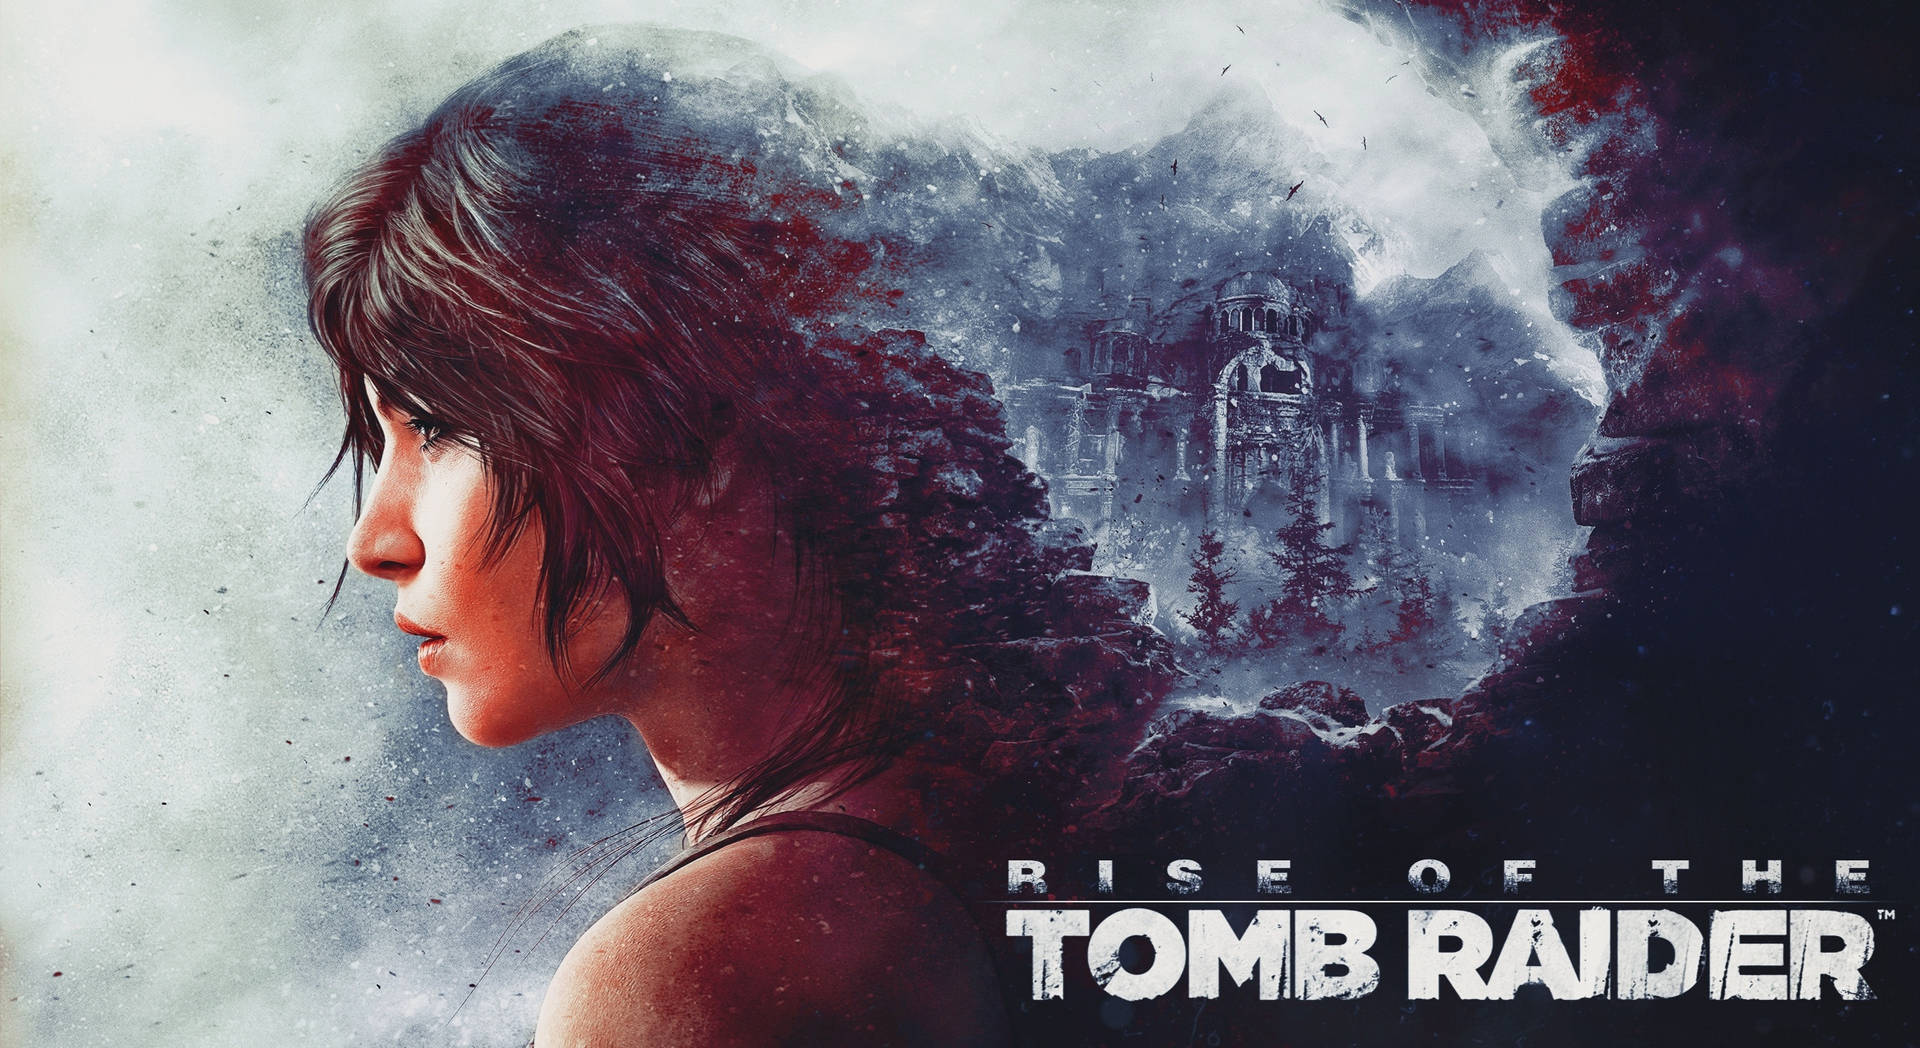 Lara Croft embarks on the toughest Tomb Raider mission yet. Wallpaper